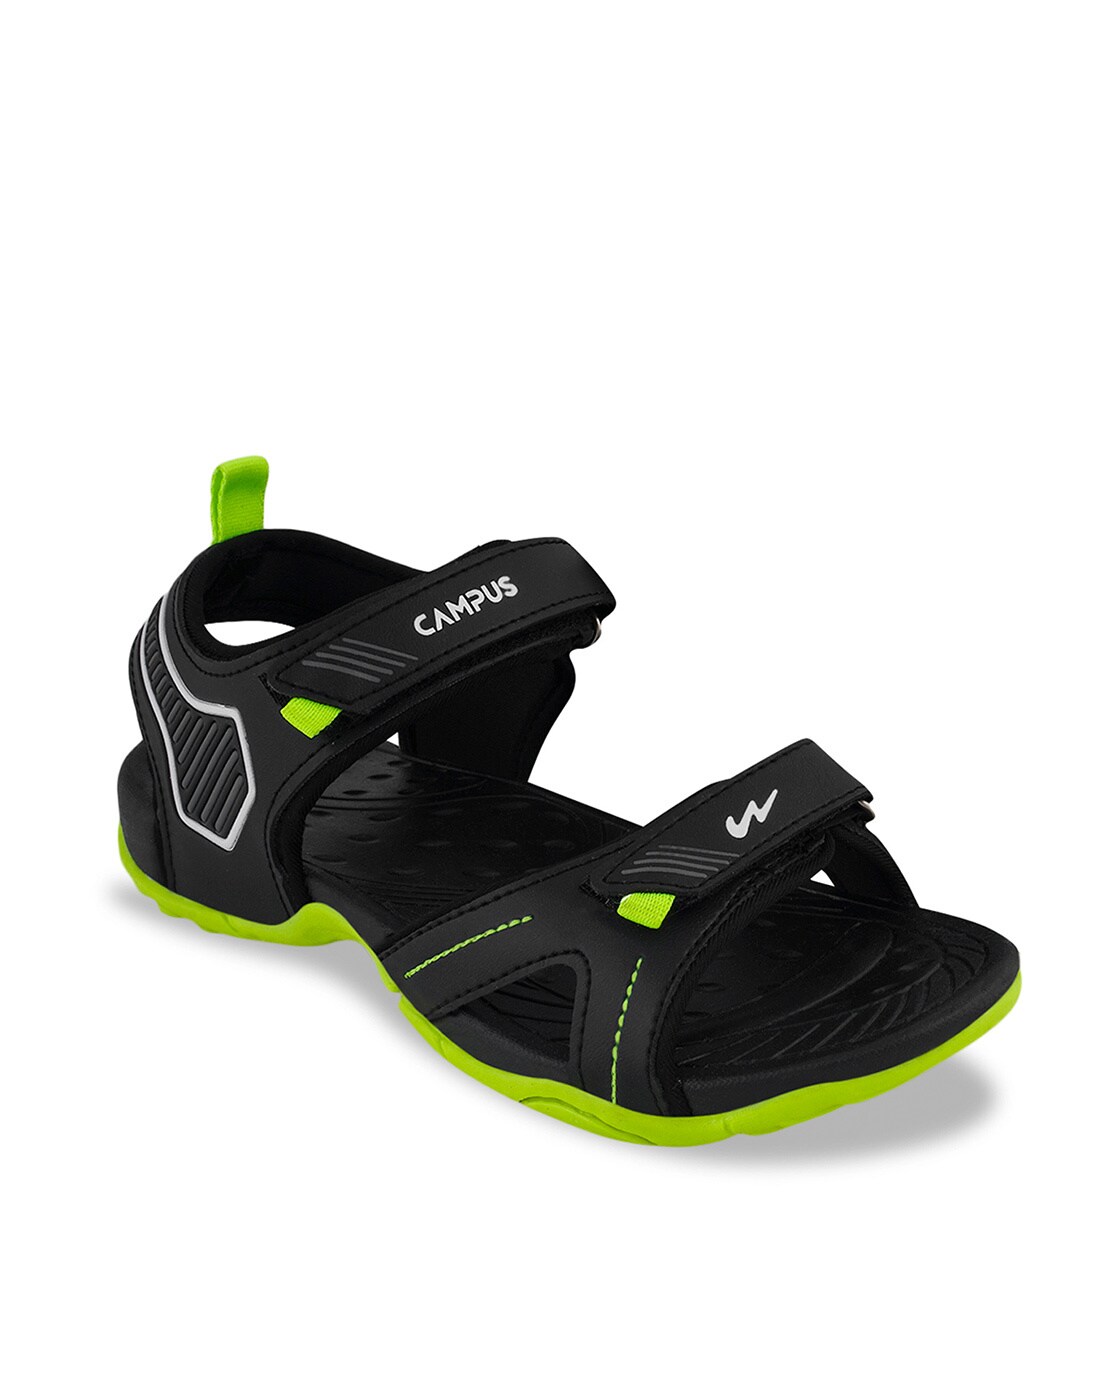 Buy Black Sandals for Boys by CAMPUS Online | Ajio.com